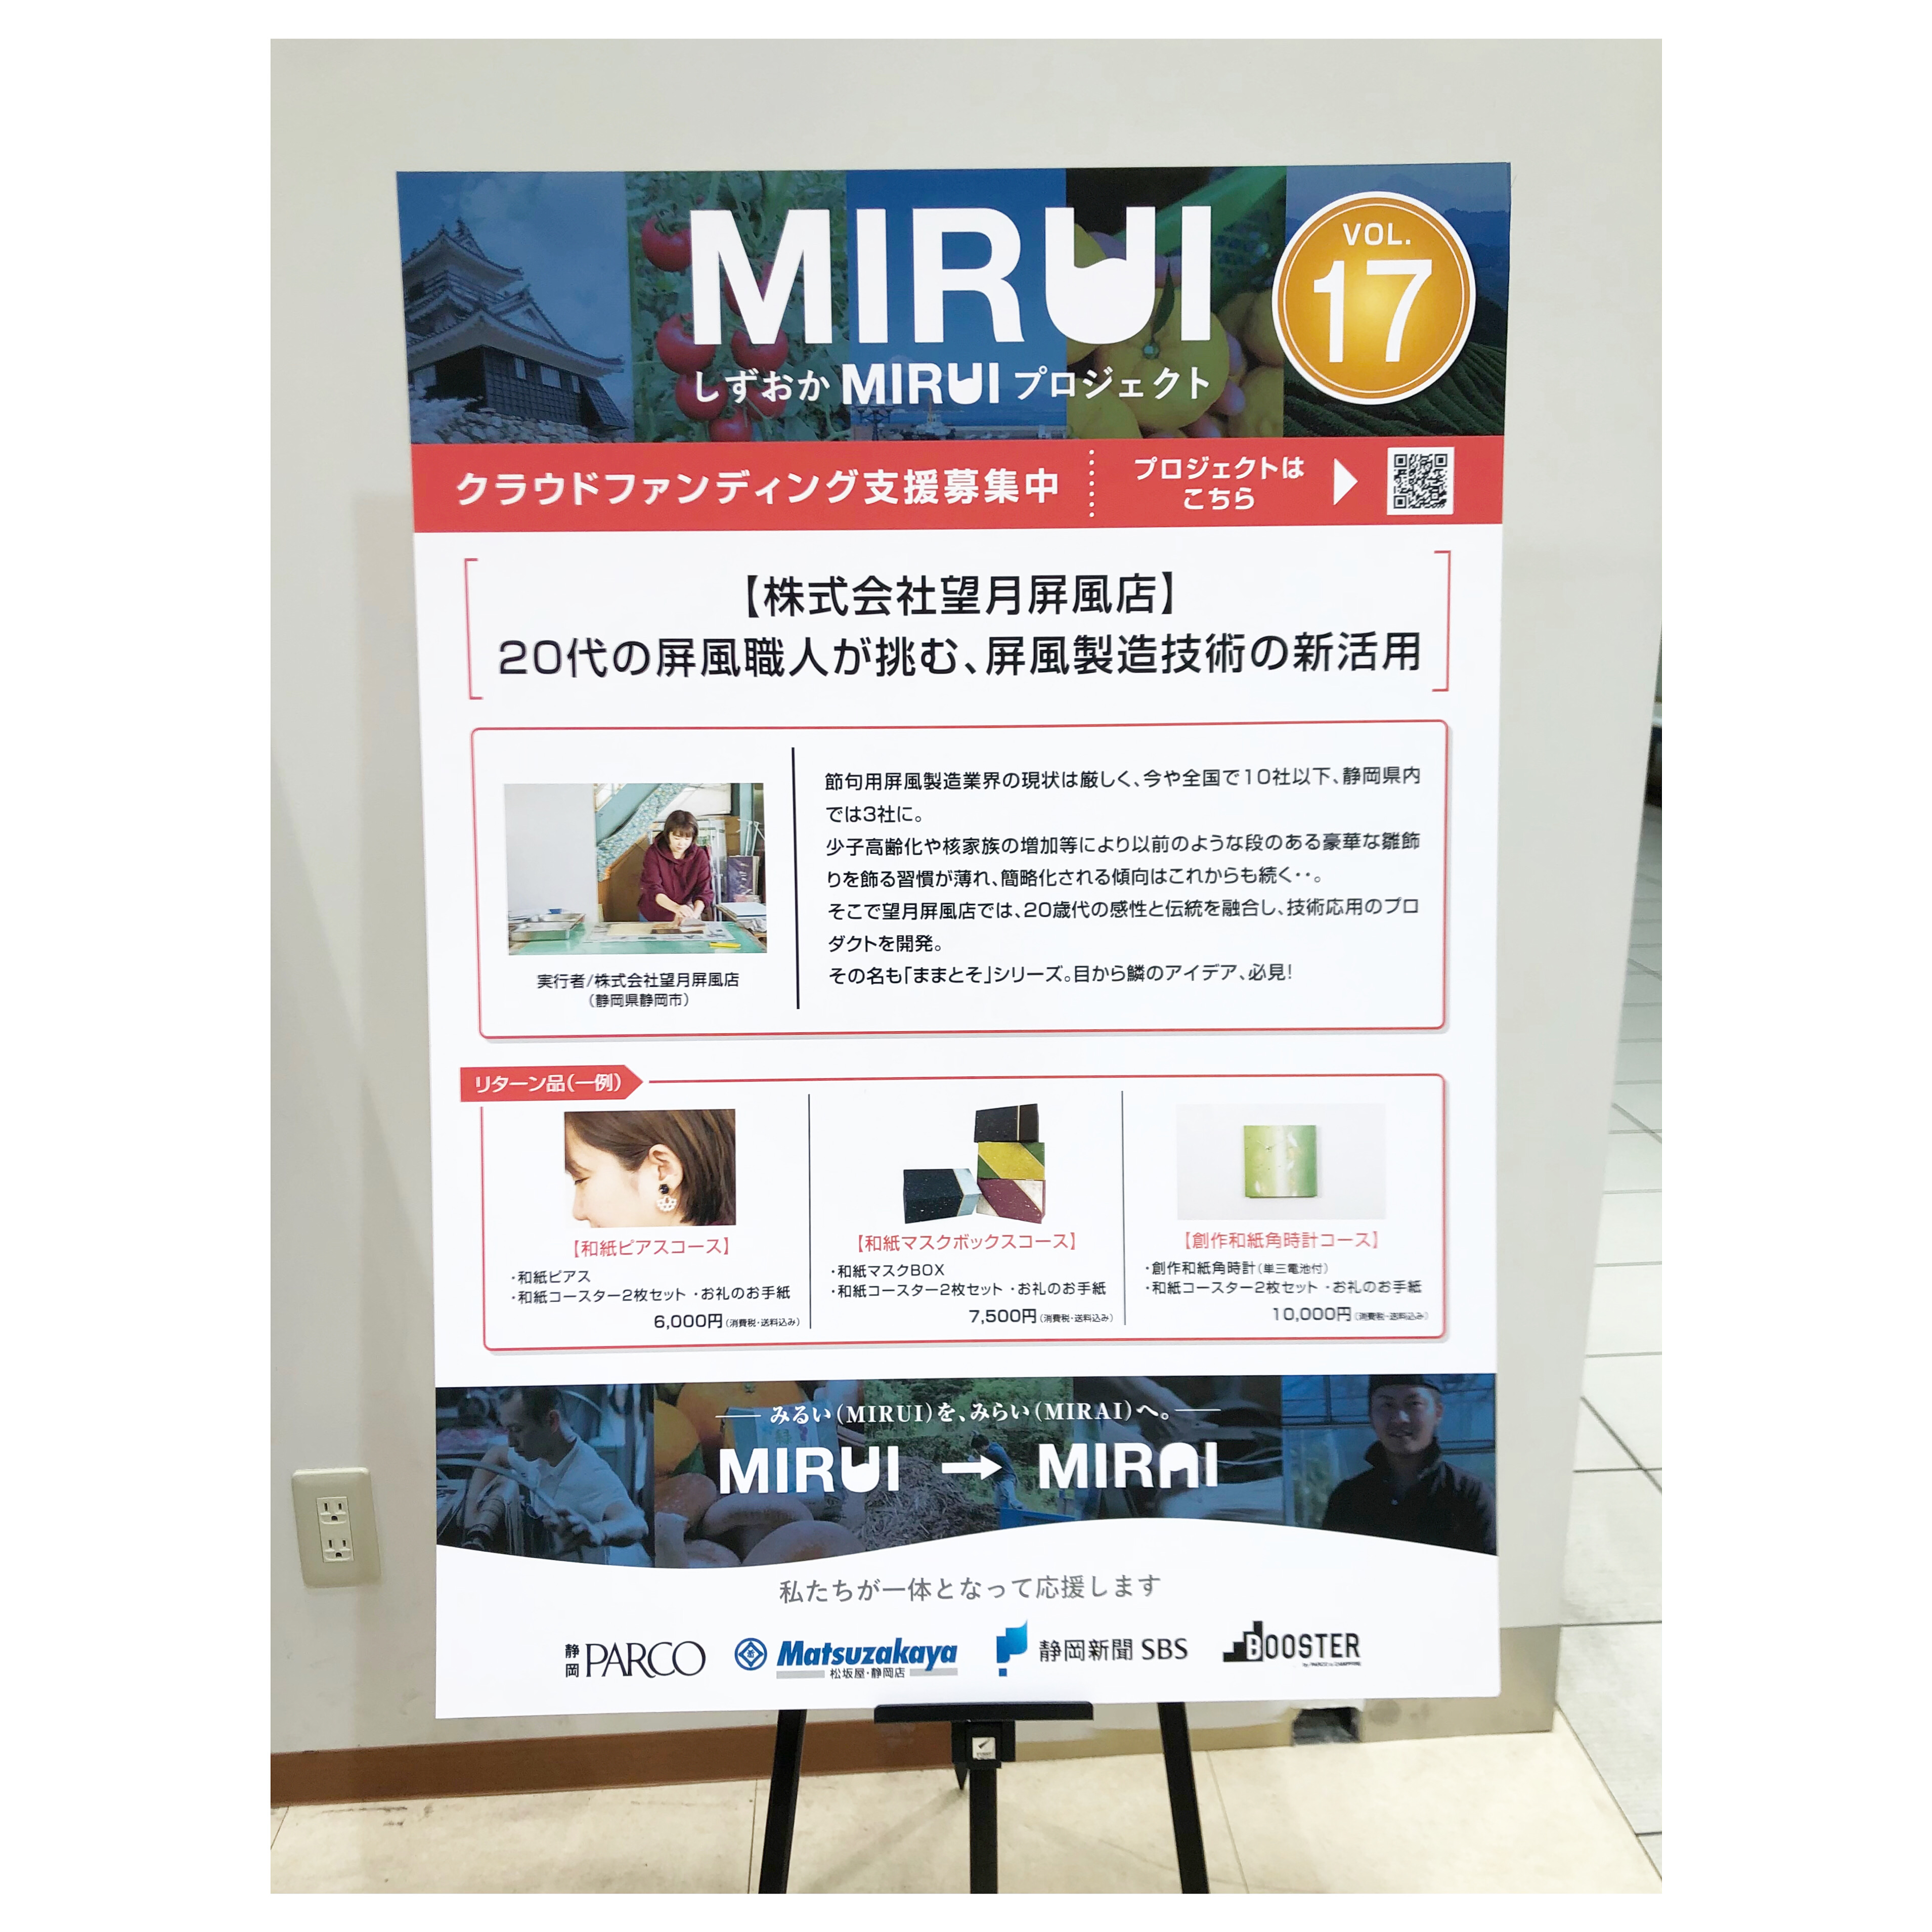 MIRUIプロジェクトPR展示のお知らせ【松坂屋 静岡店さん】